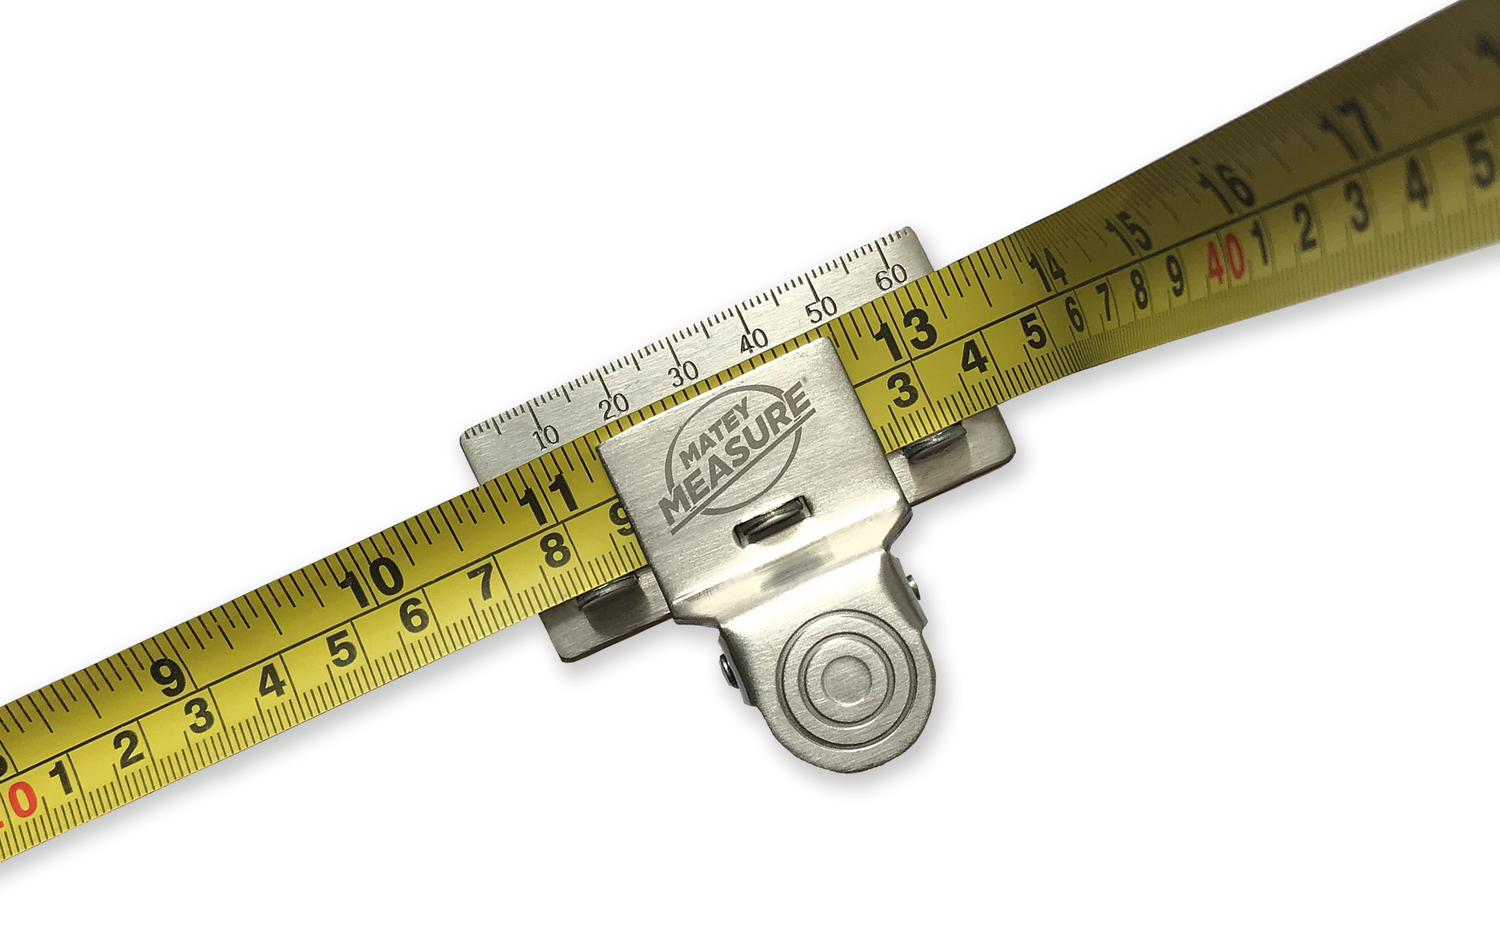 Matey Measure  Don't Guess It… Matey Measure It